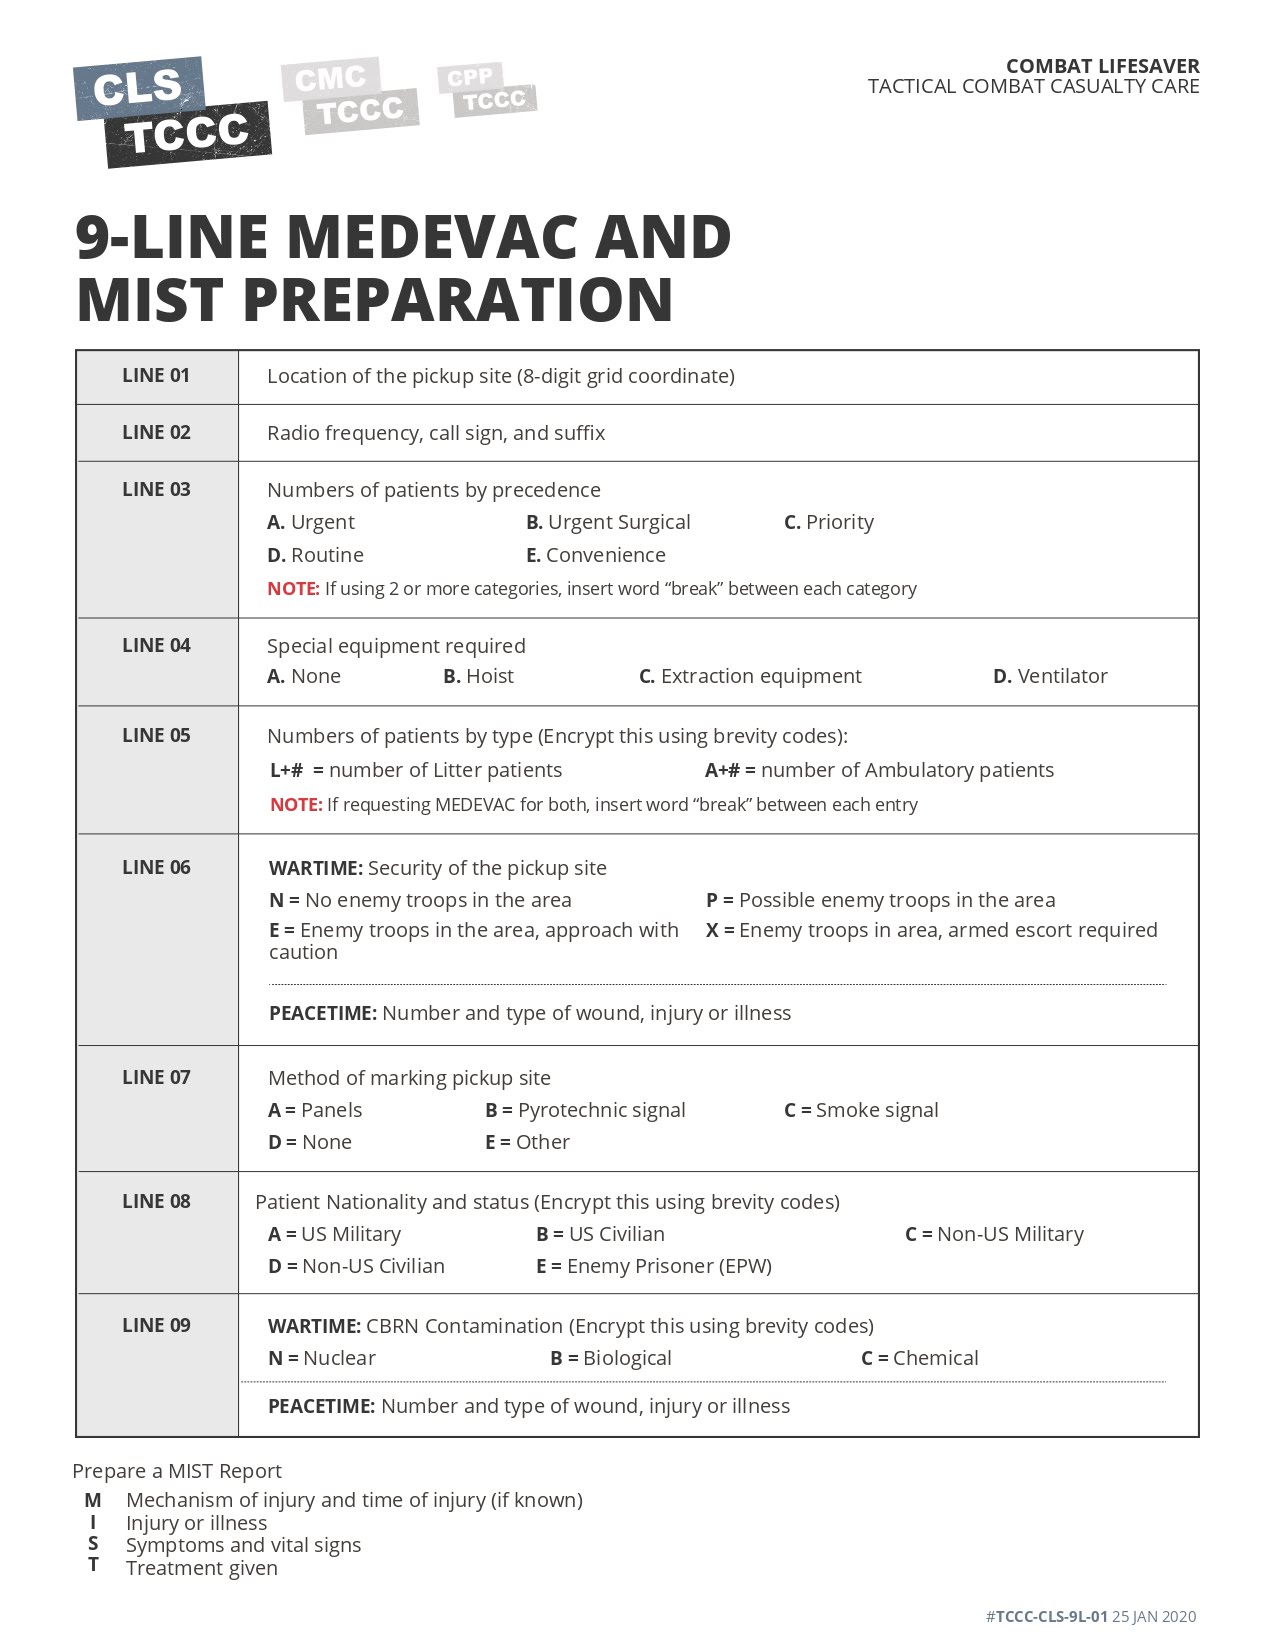 9-Line MEDEVAC and MIST Preparation